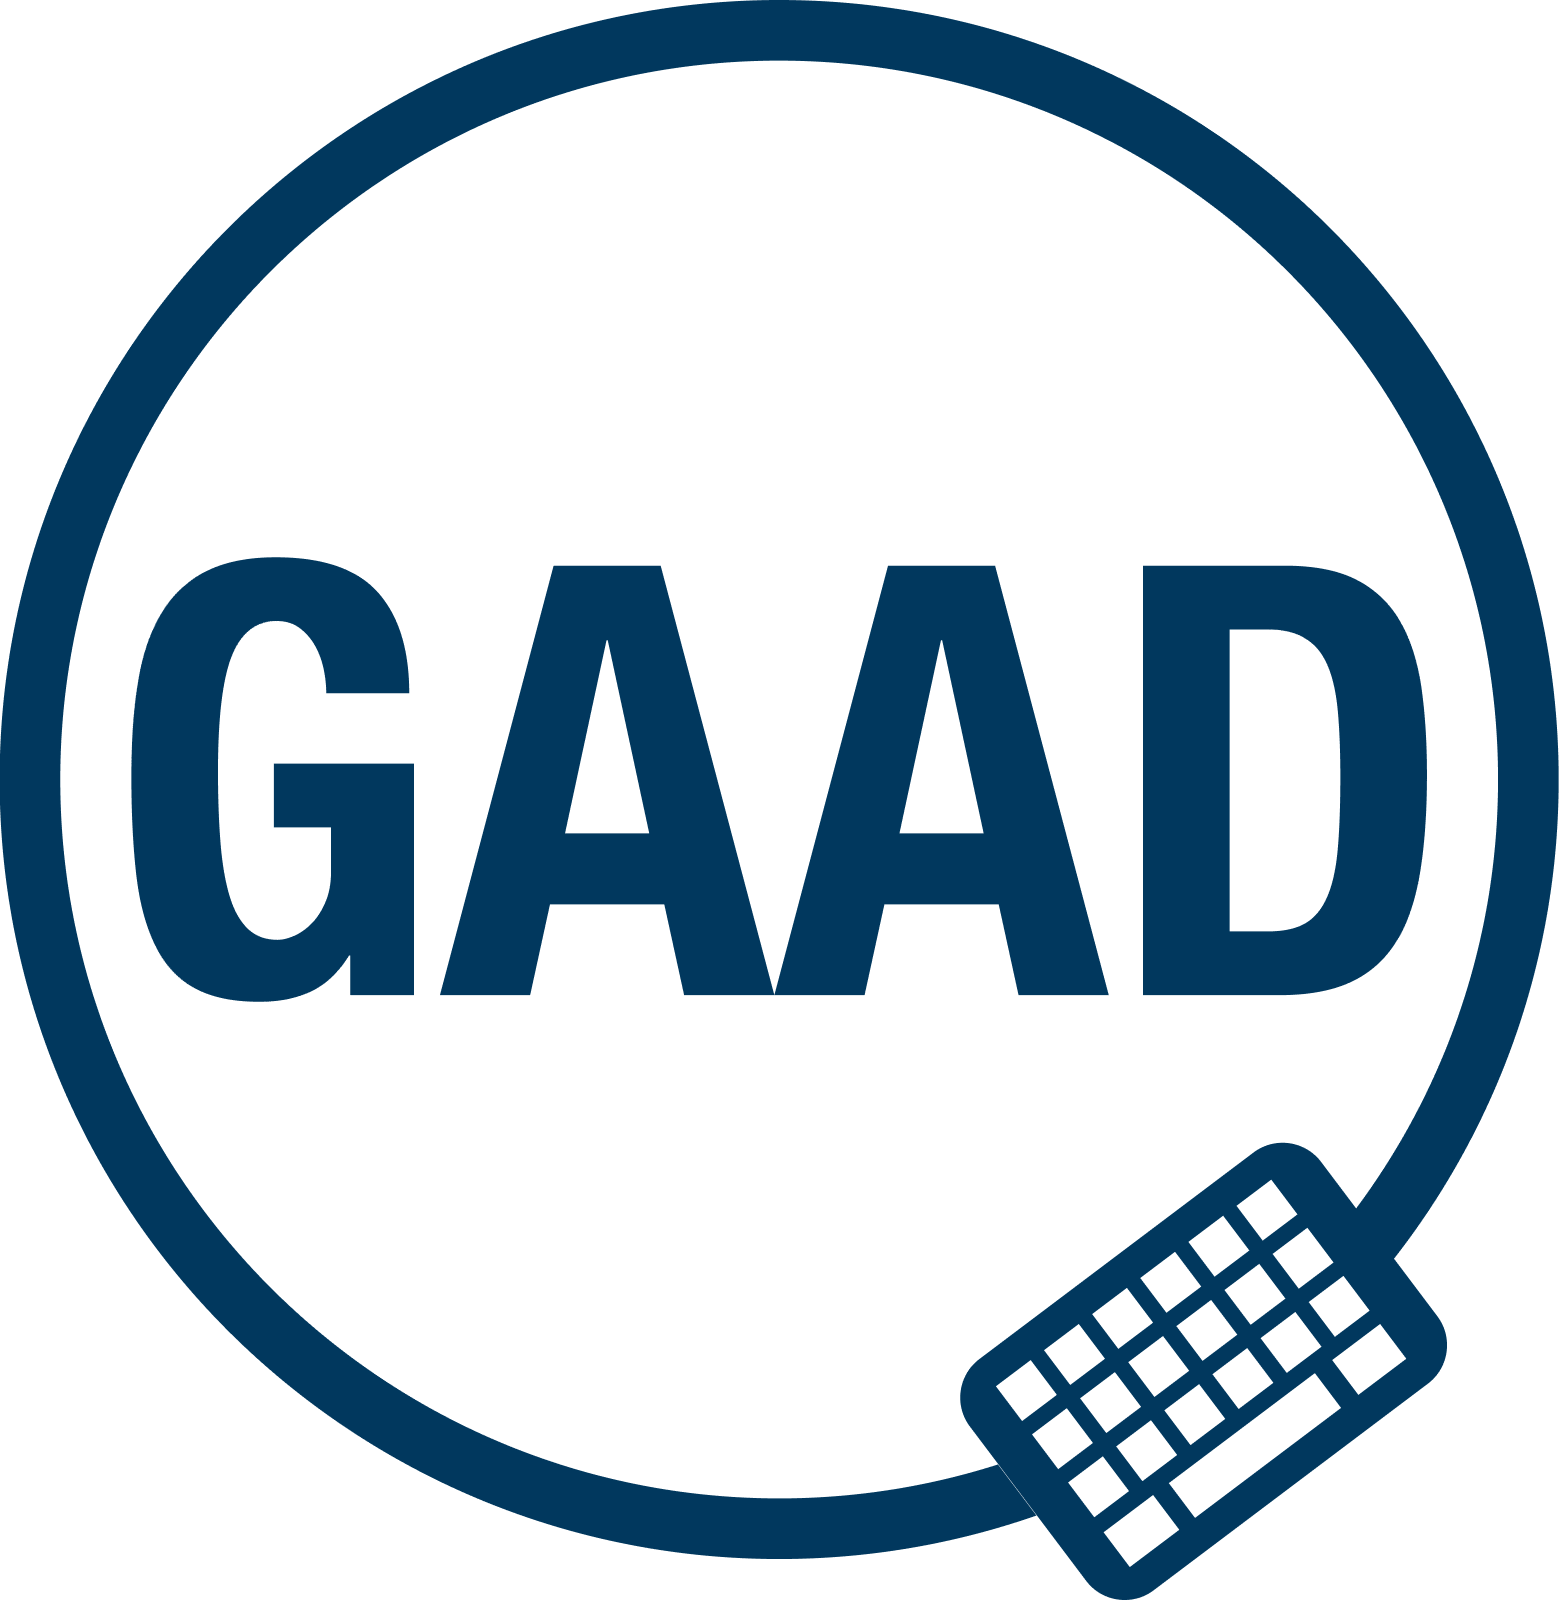 GAAD logo in dark blue